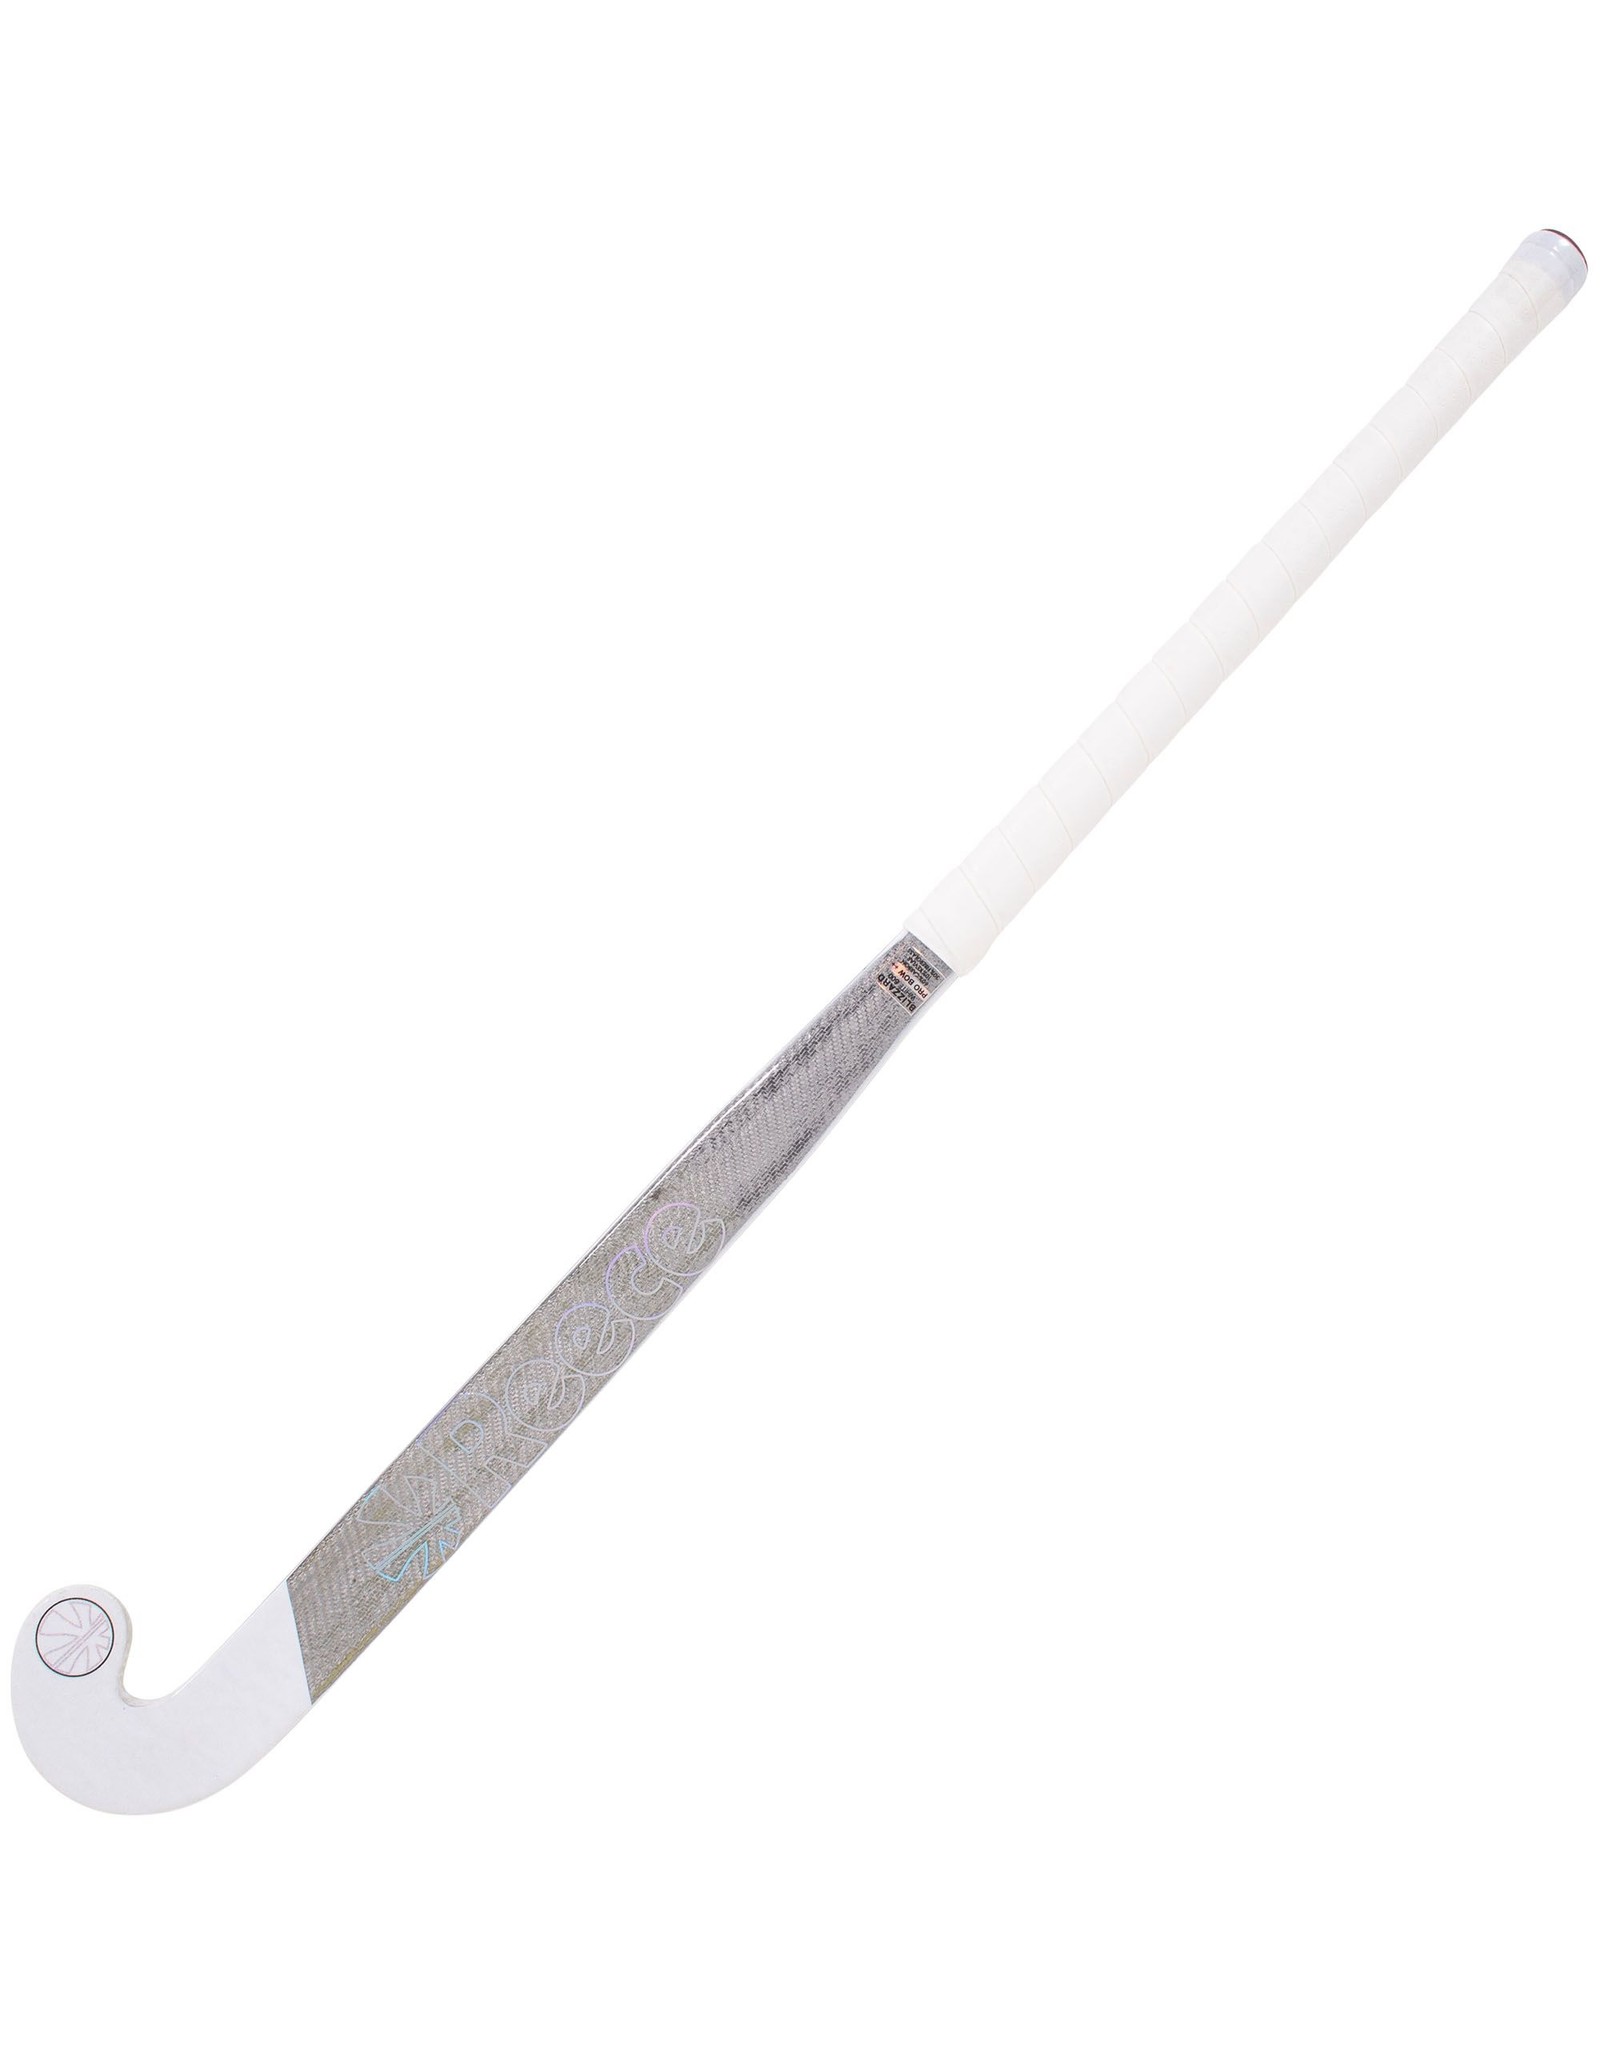 Reece Australia Blizzard 600 Hockey Stick-White-Multi